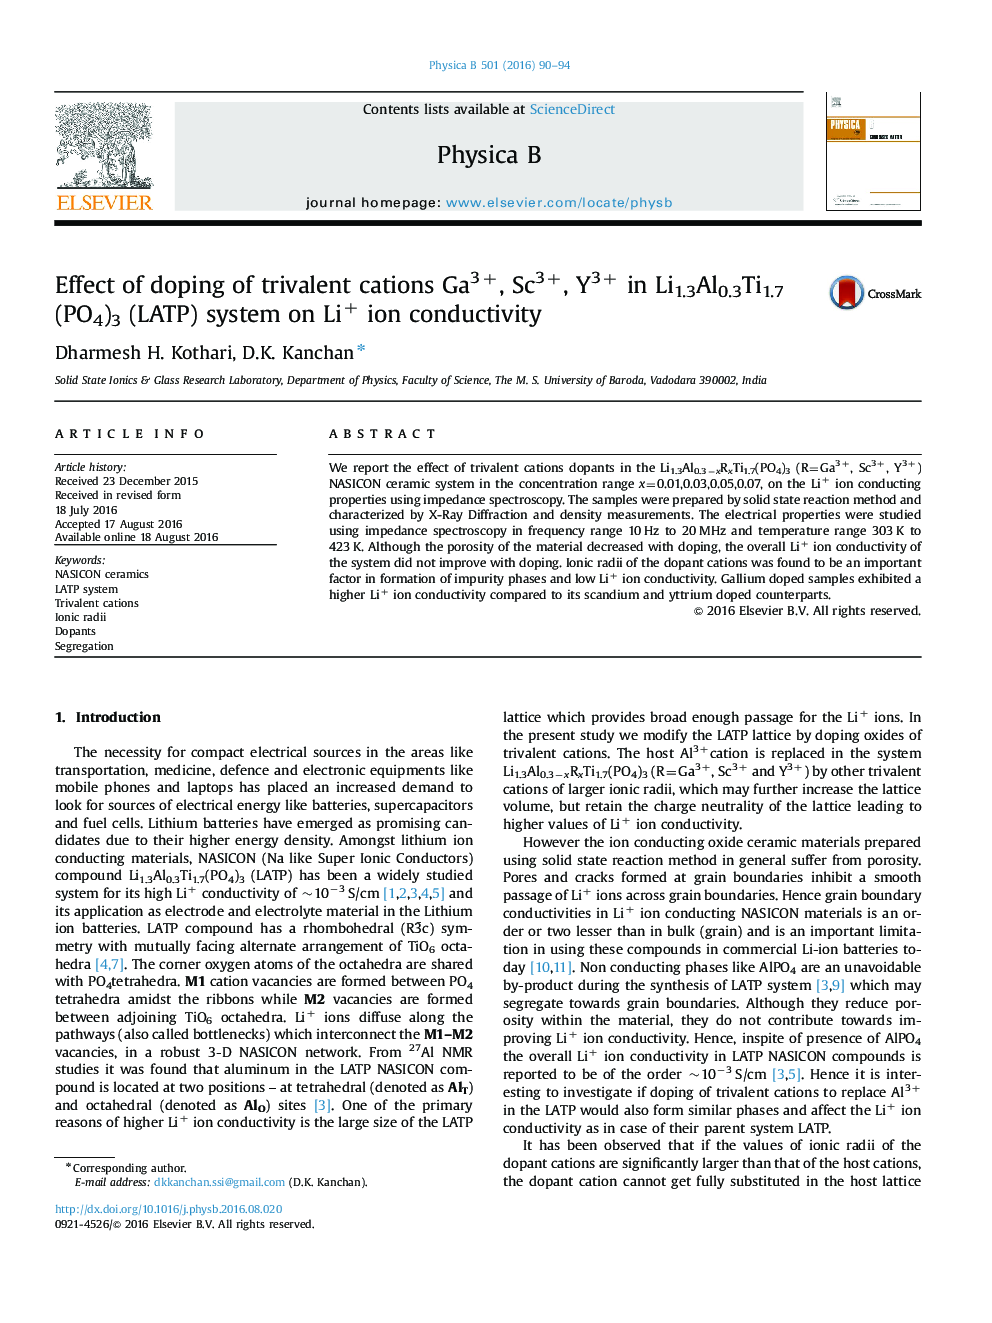 Effect of doping of trivalent cations Ga3+, Sc3+, Y3+ in Li1.3Al0.3Ti1.7 (PO4)3 (LATP) system on Li+ ion conductivity